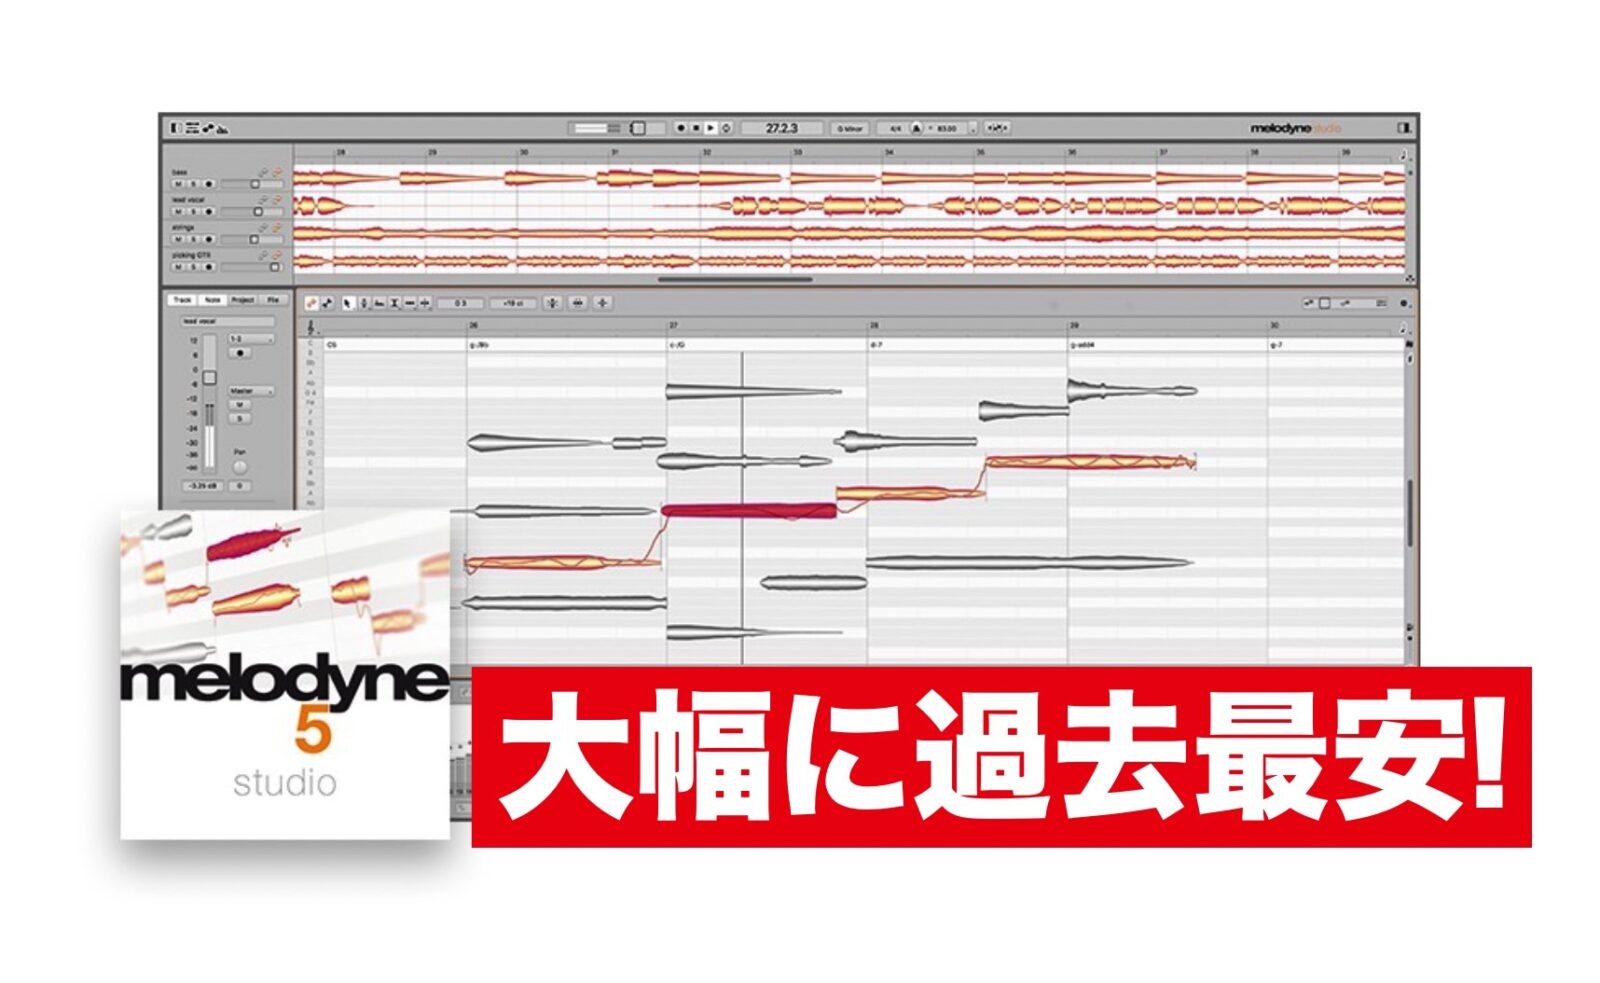 Celemony Software MELODYNE 5 EDITOR ピッチ編集ソフト パッケージ版